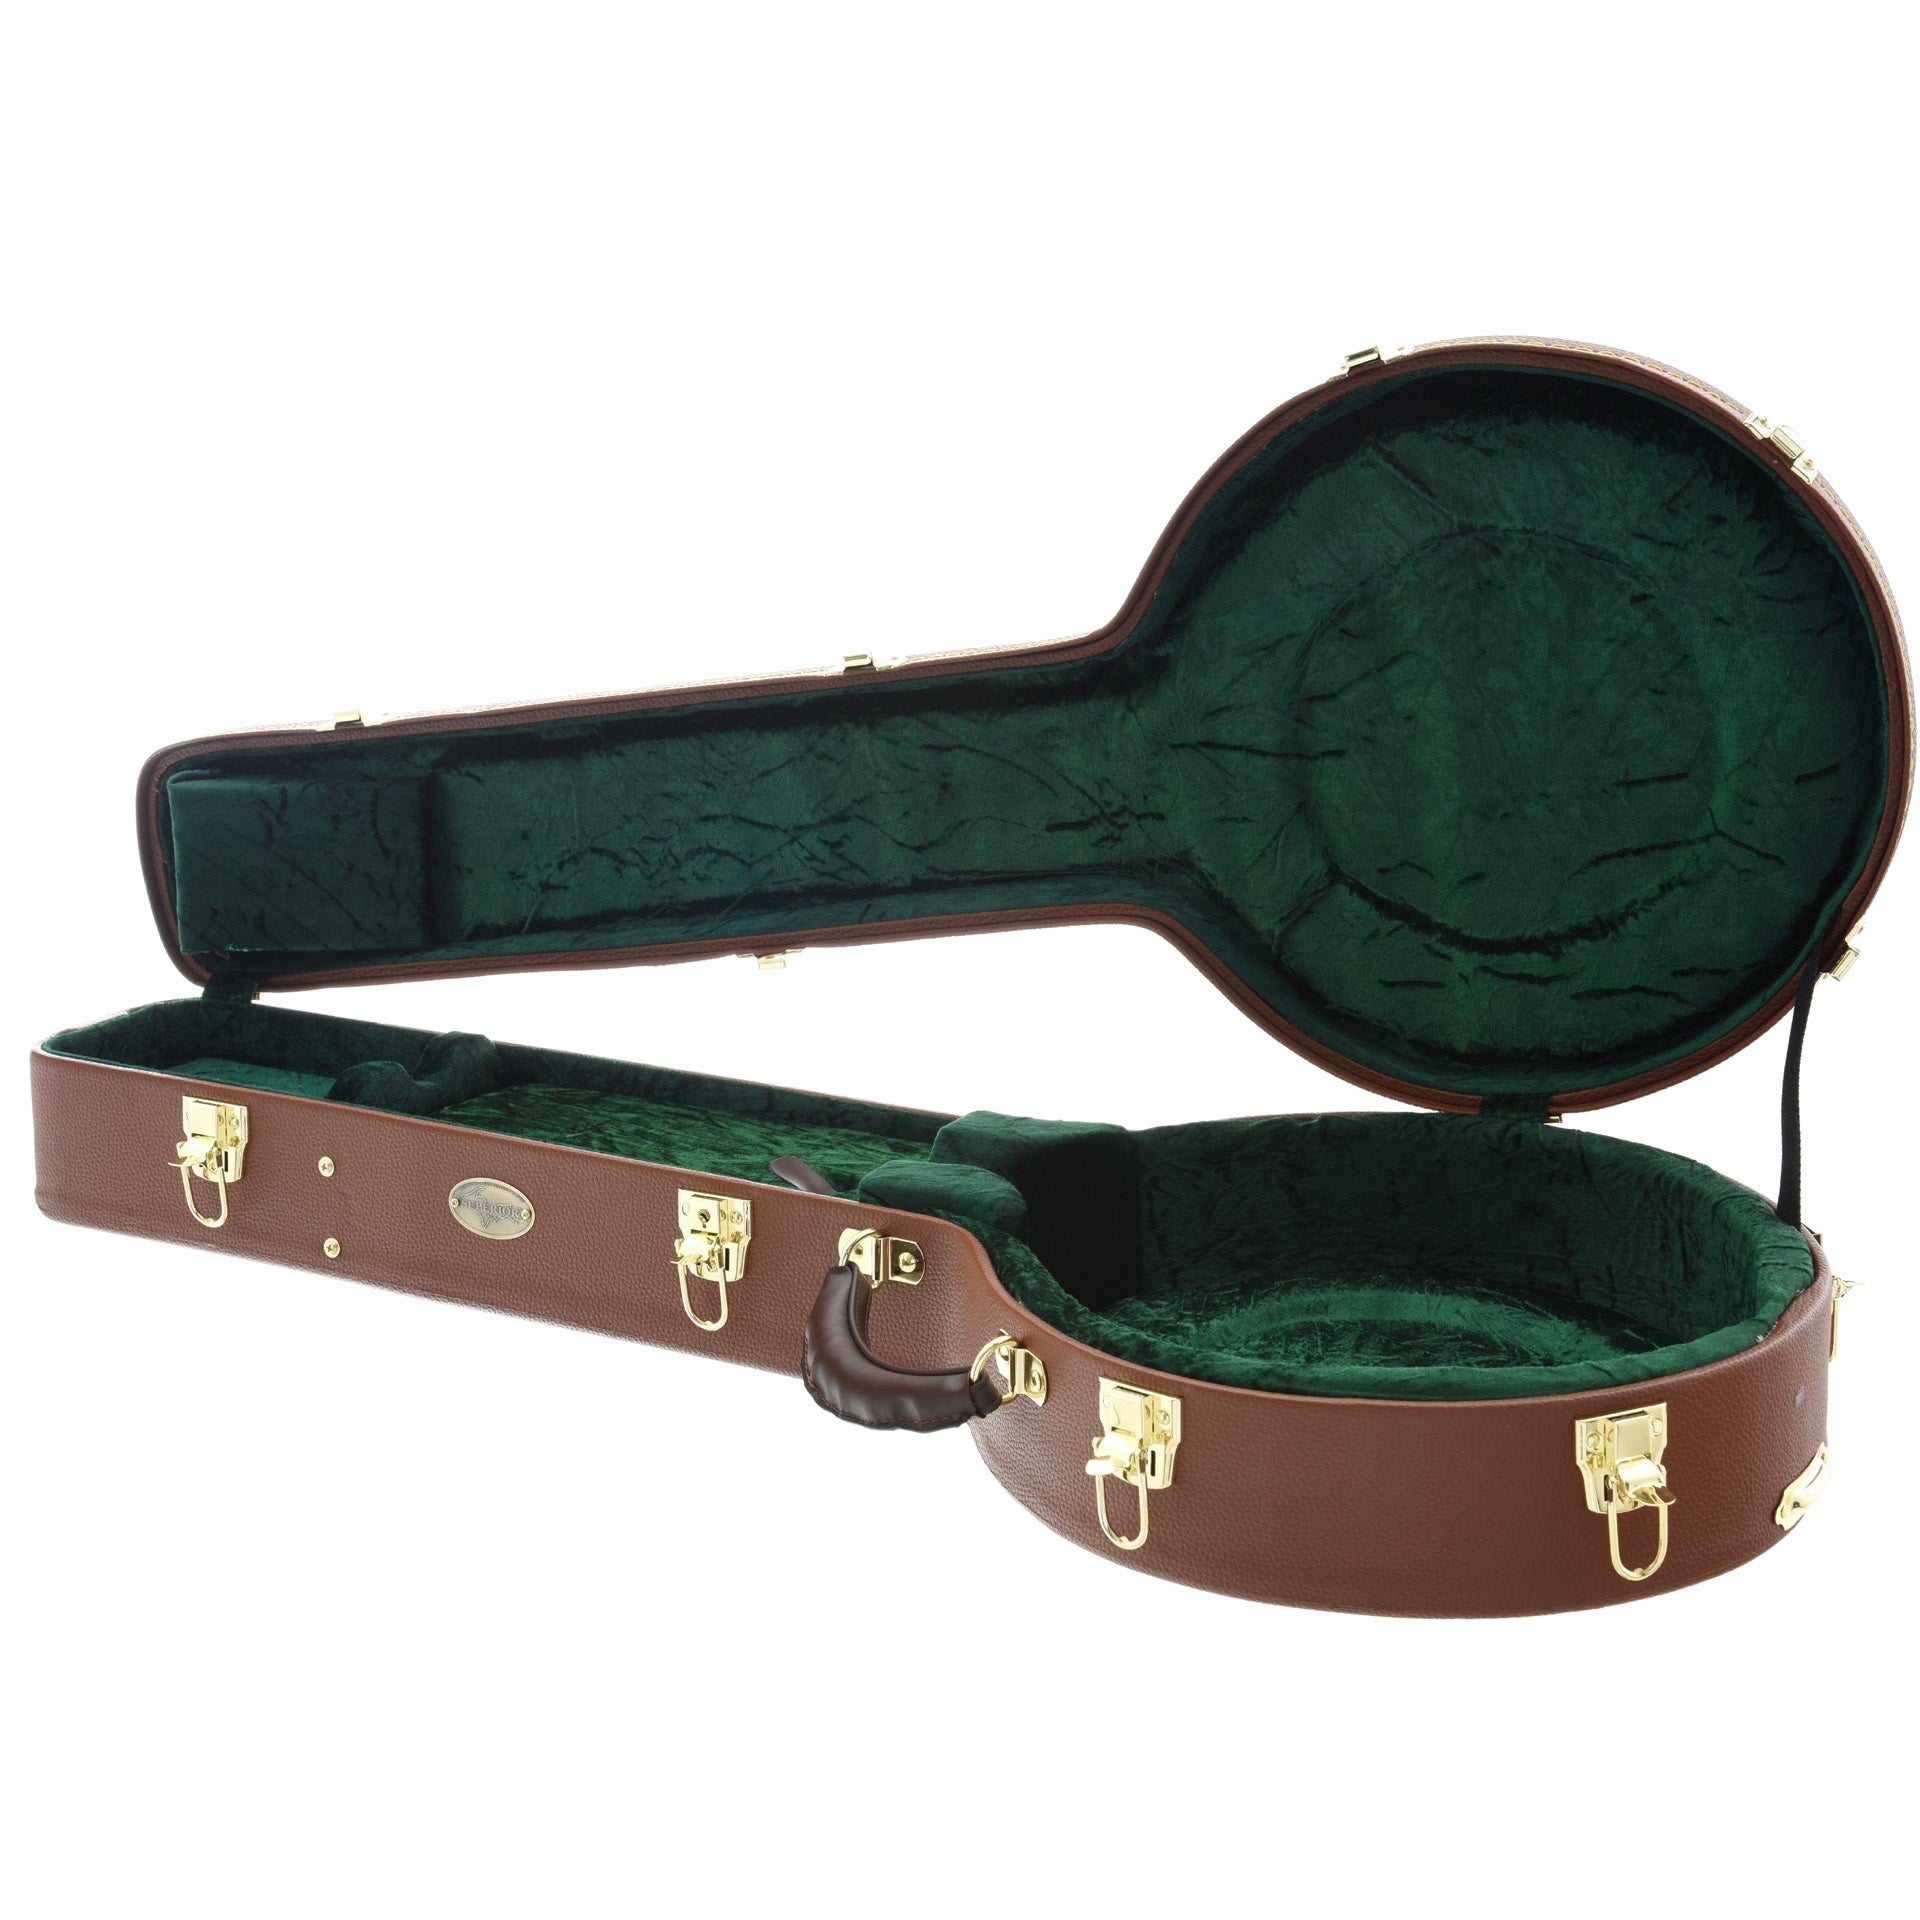 Image 2 of Superior Deluxe Resonator Banjo Case - SKU# SDBR1-BRN : Product Type Accessories & Parts : Elderly Instruments